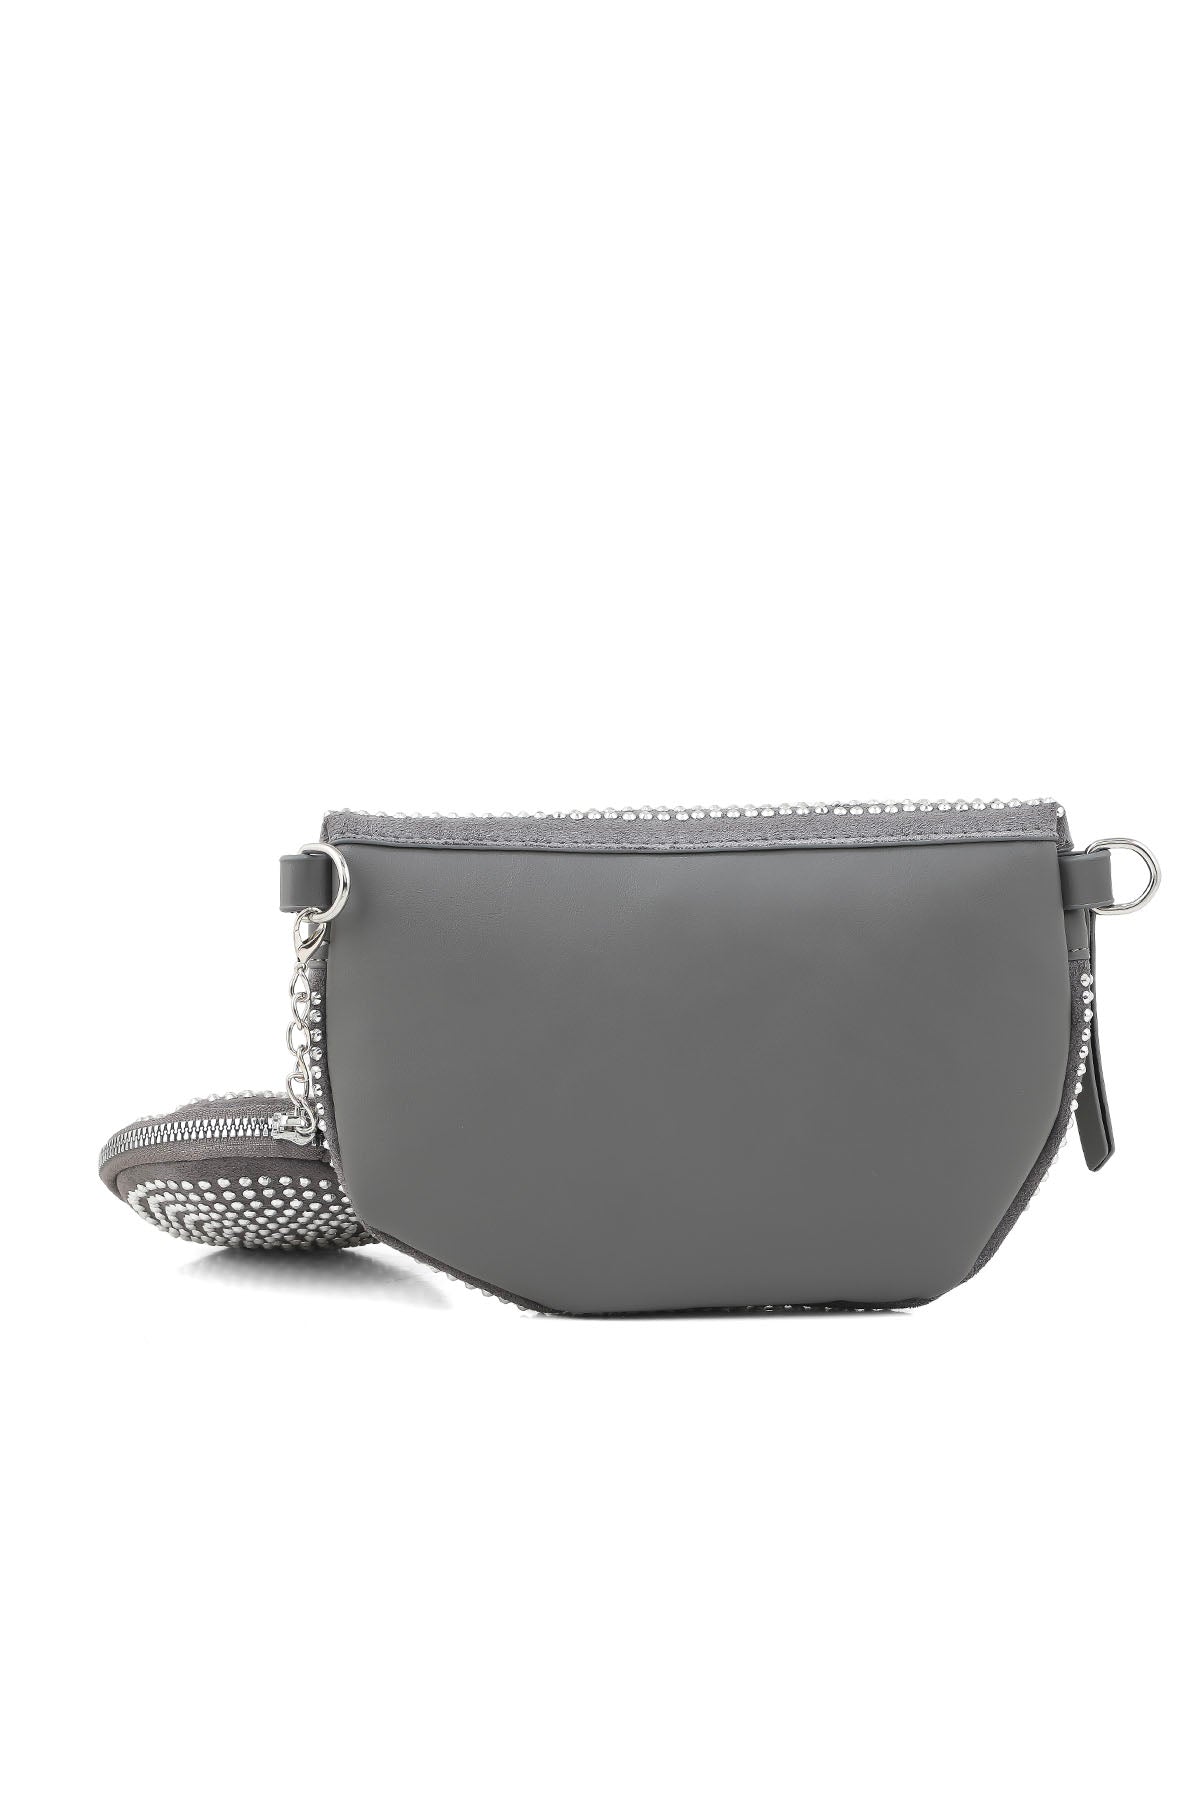 Cross Shoulder Bags B14960-Grey